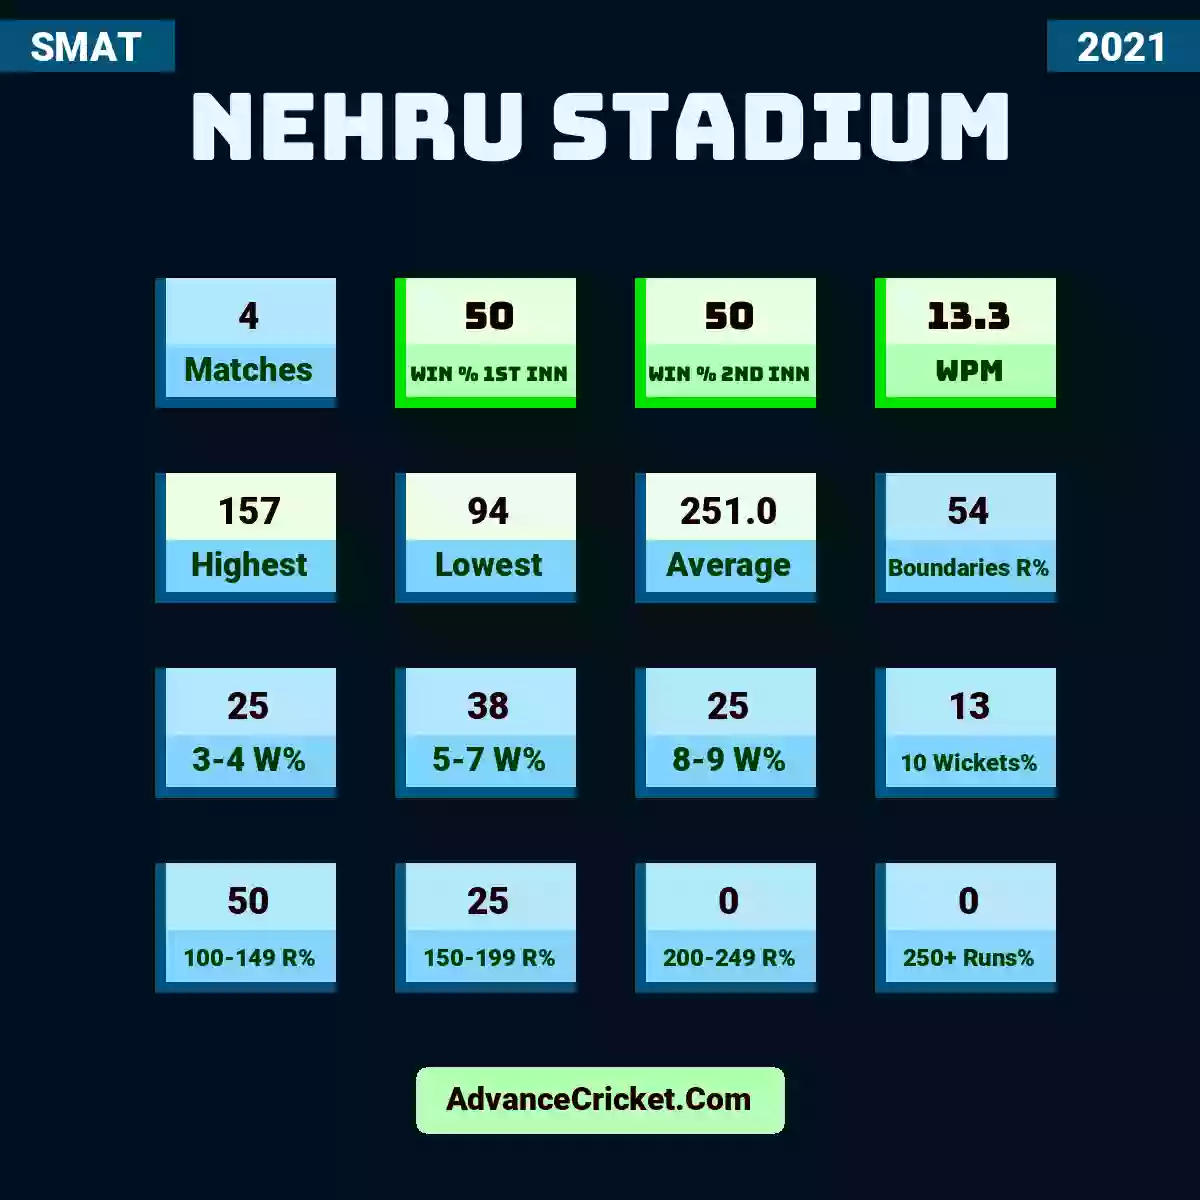 Image showing Nehru Stadium with Matches: 4, Win % 1st Inn: 50, Win % 2nd Inn: 50, WPM: 13.3, Highest: 157, Lowest: 94, Average: 251.0, Boundaries R%: 54, 3-4 W%: 25, 5-7 W%: 38, 8-9 W%: 25, 10 Wickets%: 13, 100-149 R%: 50, 150-199 R%: 25, 200-249 R%: 0, 250+ Runs%: 0.